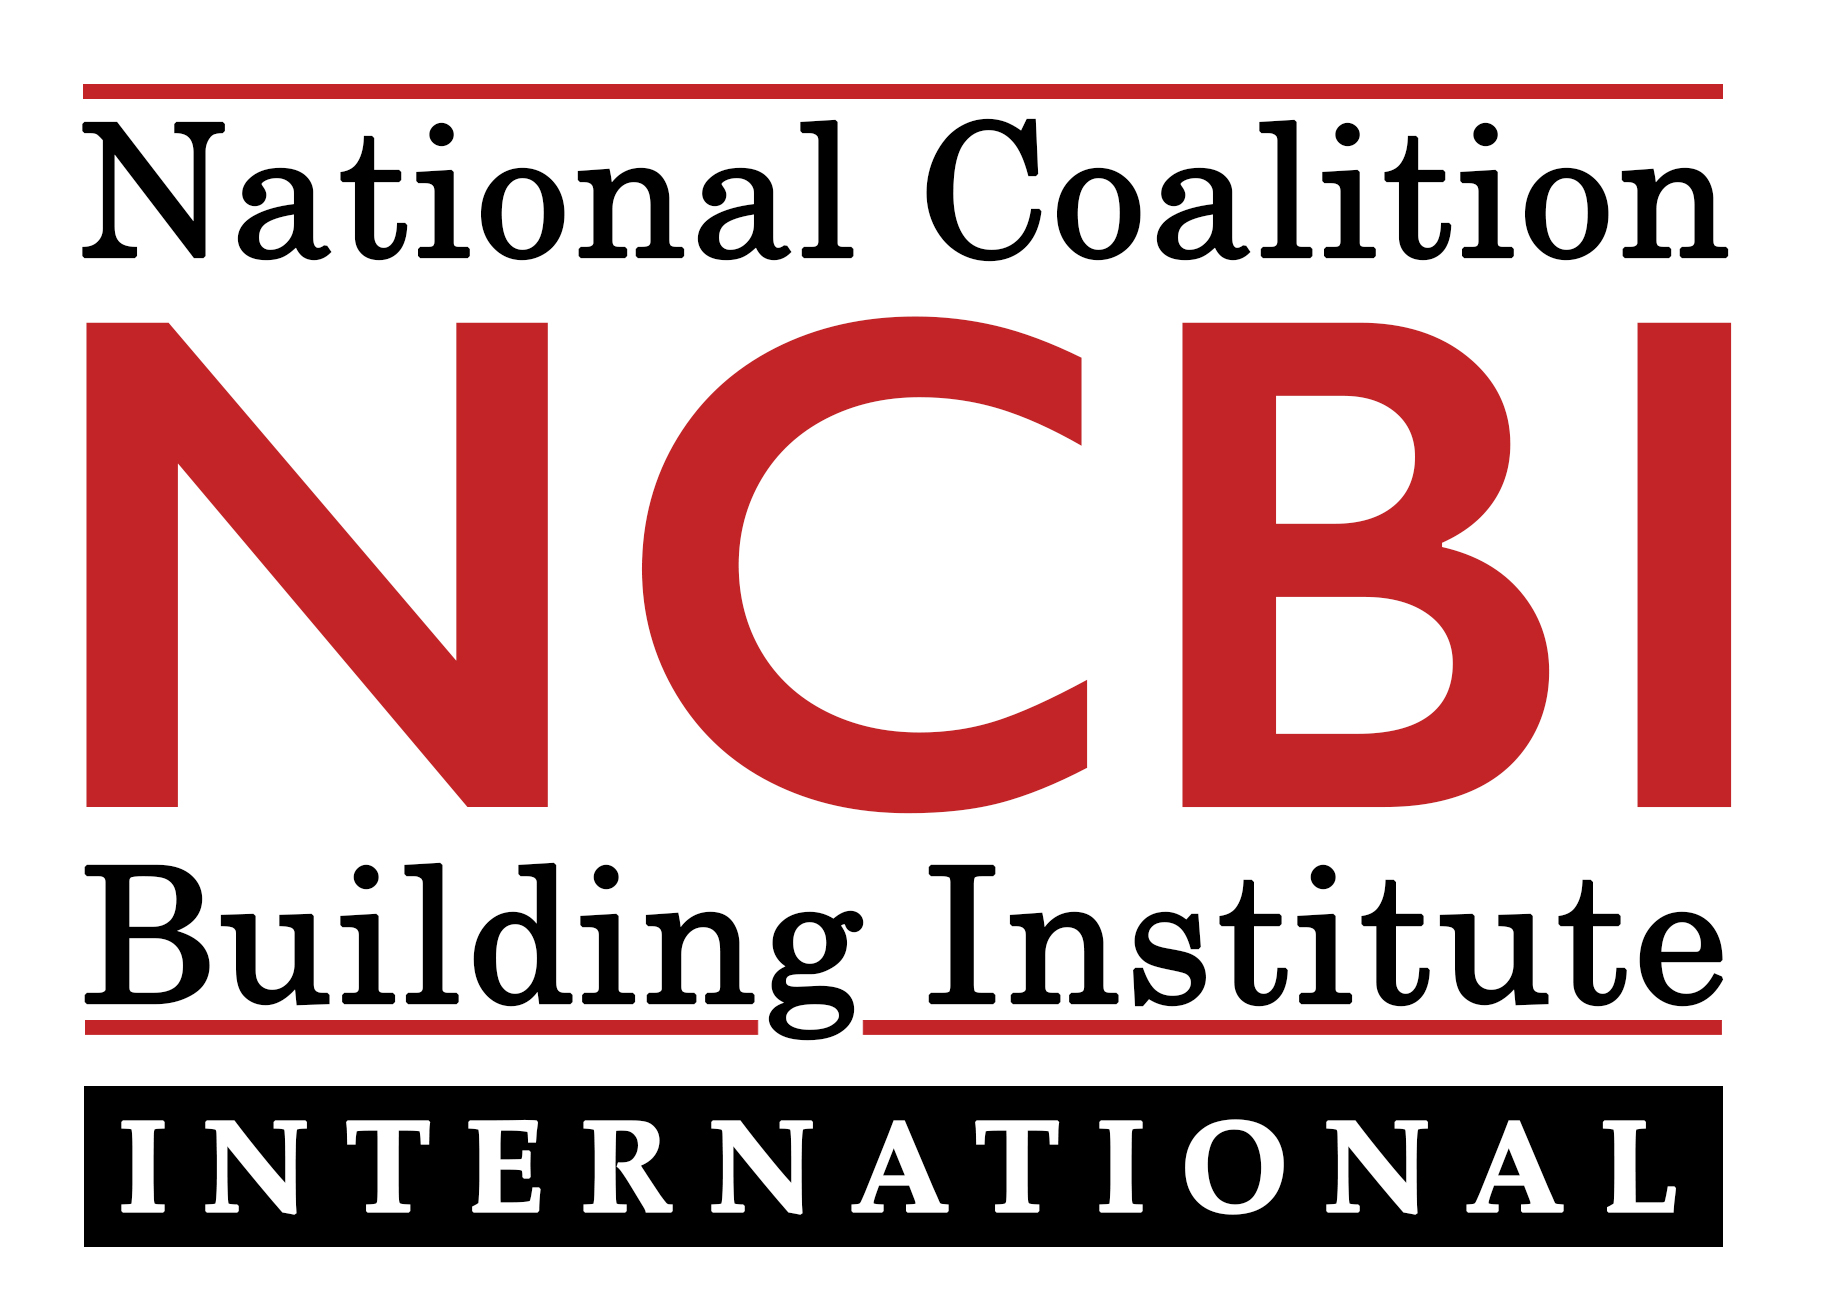 NCBI Logo